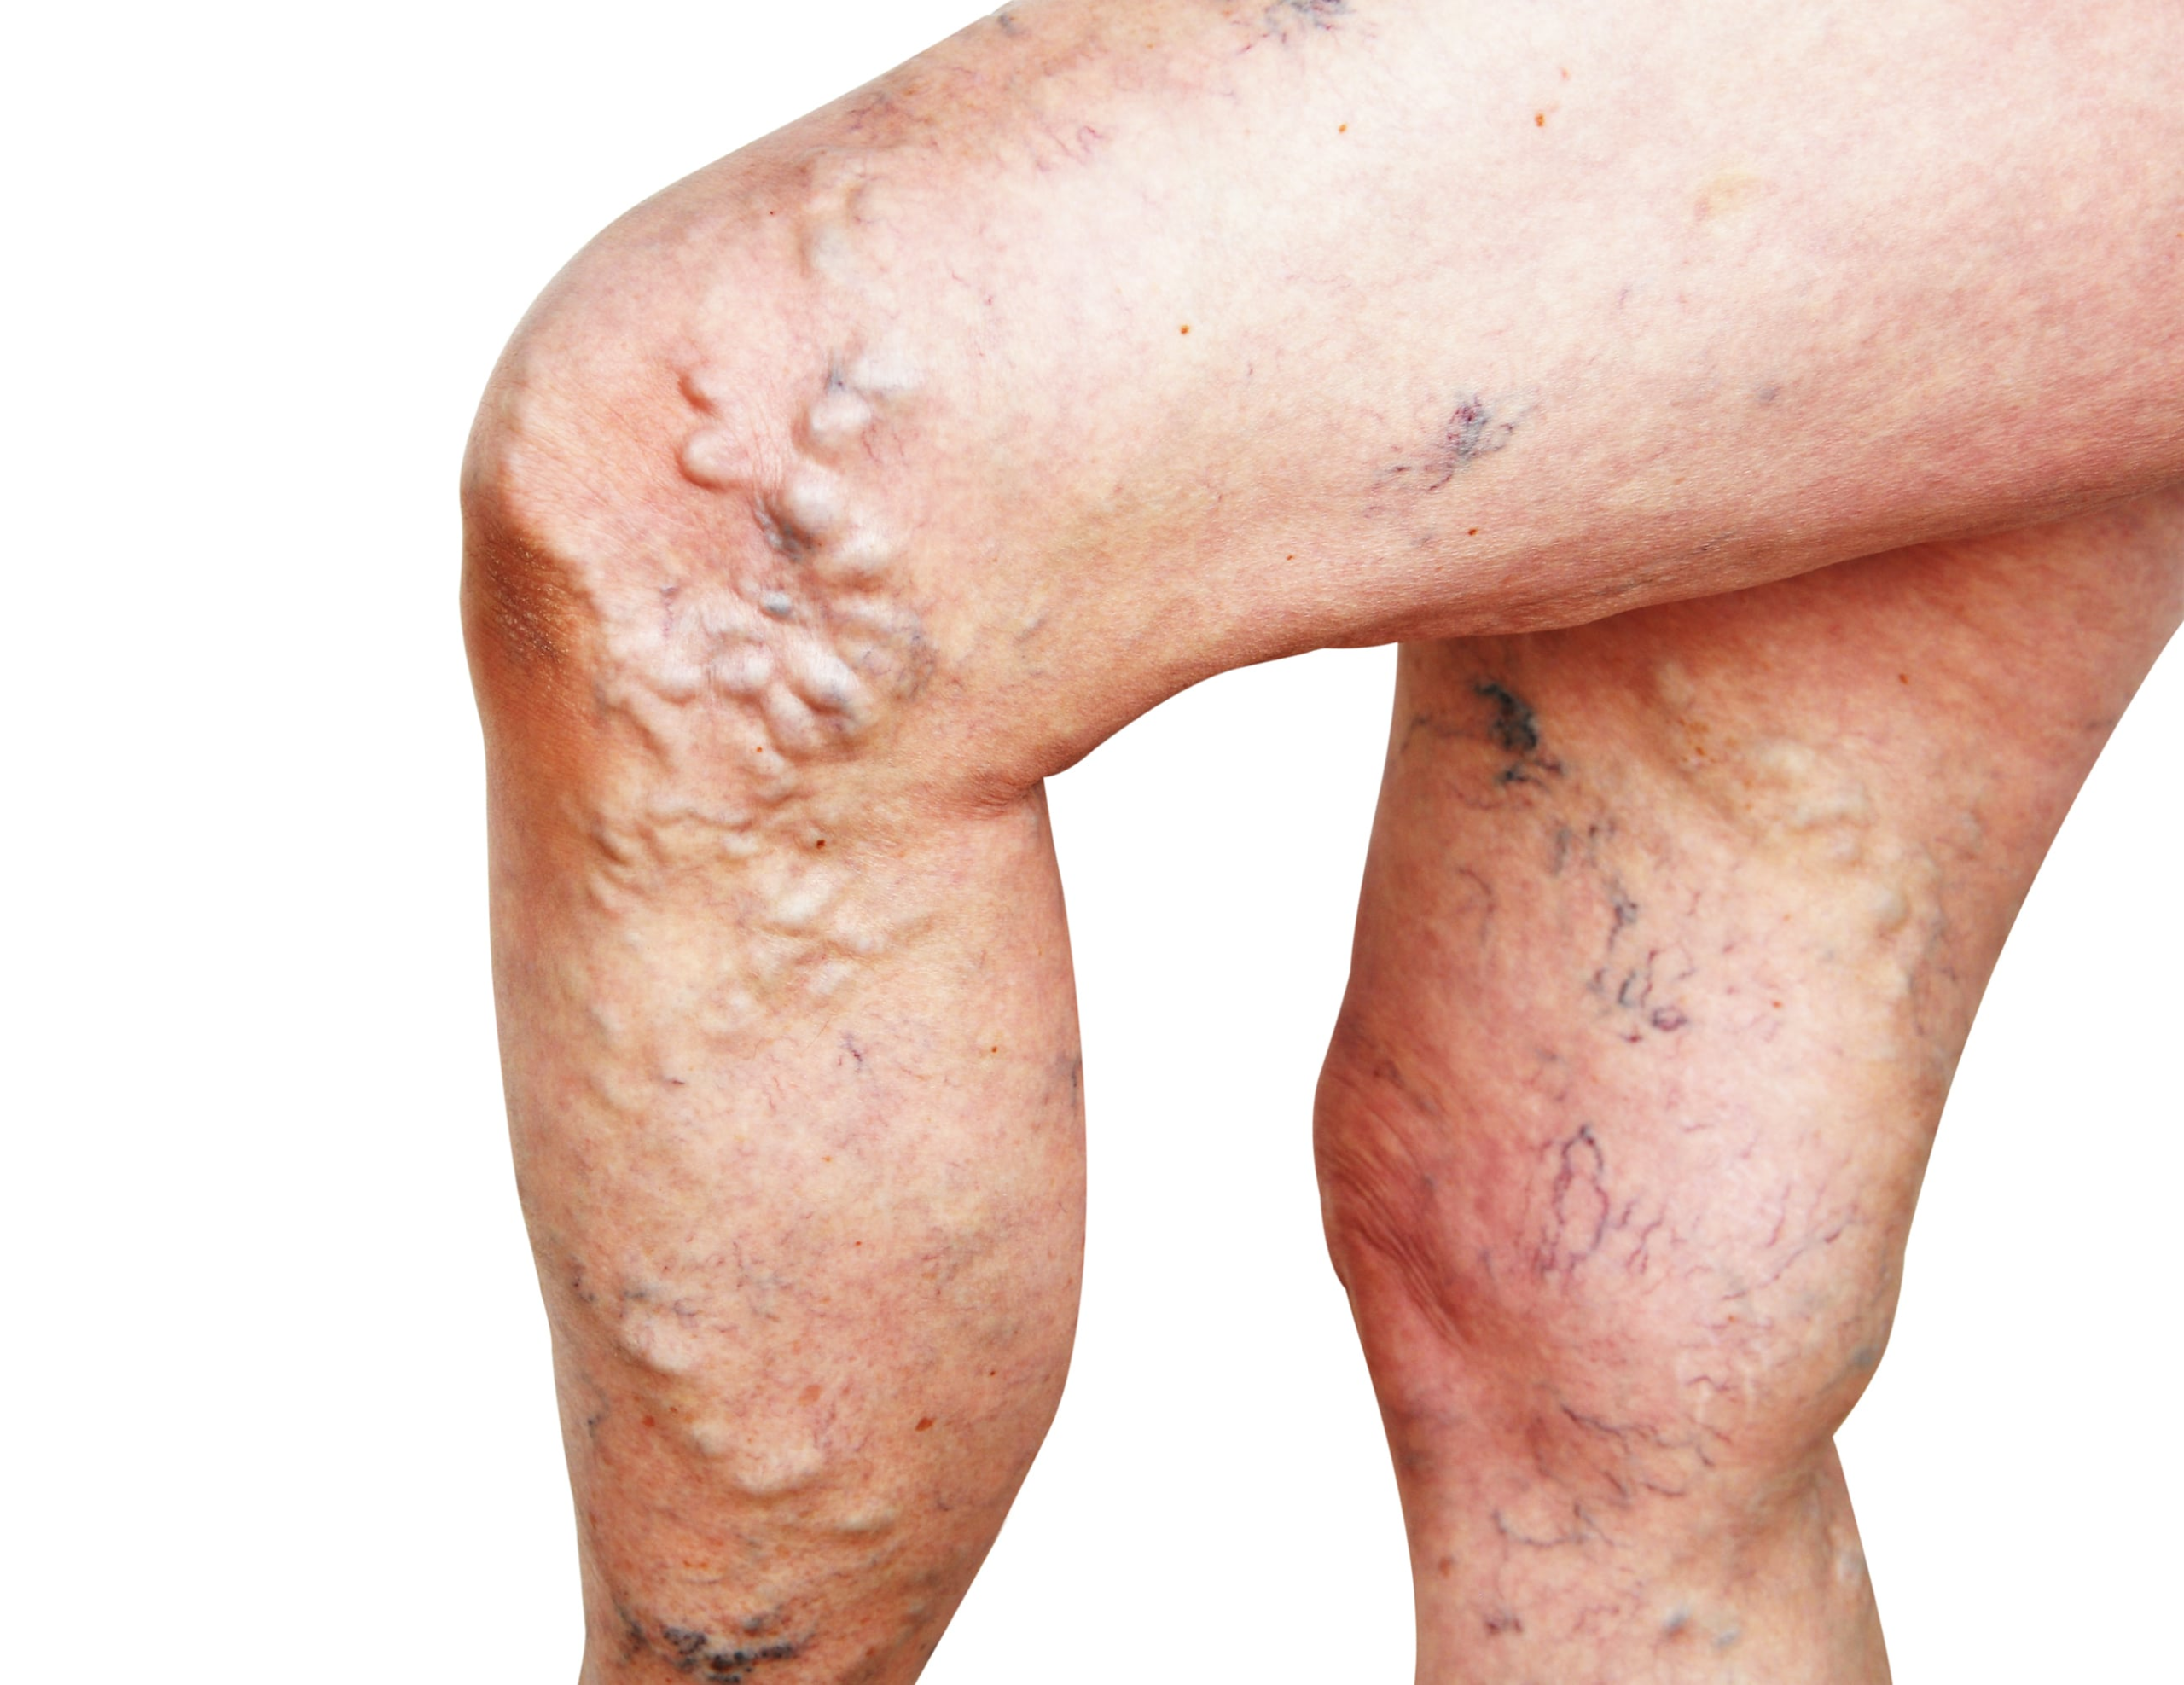 leg showing severe varicose veins